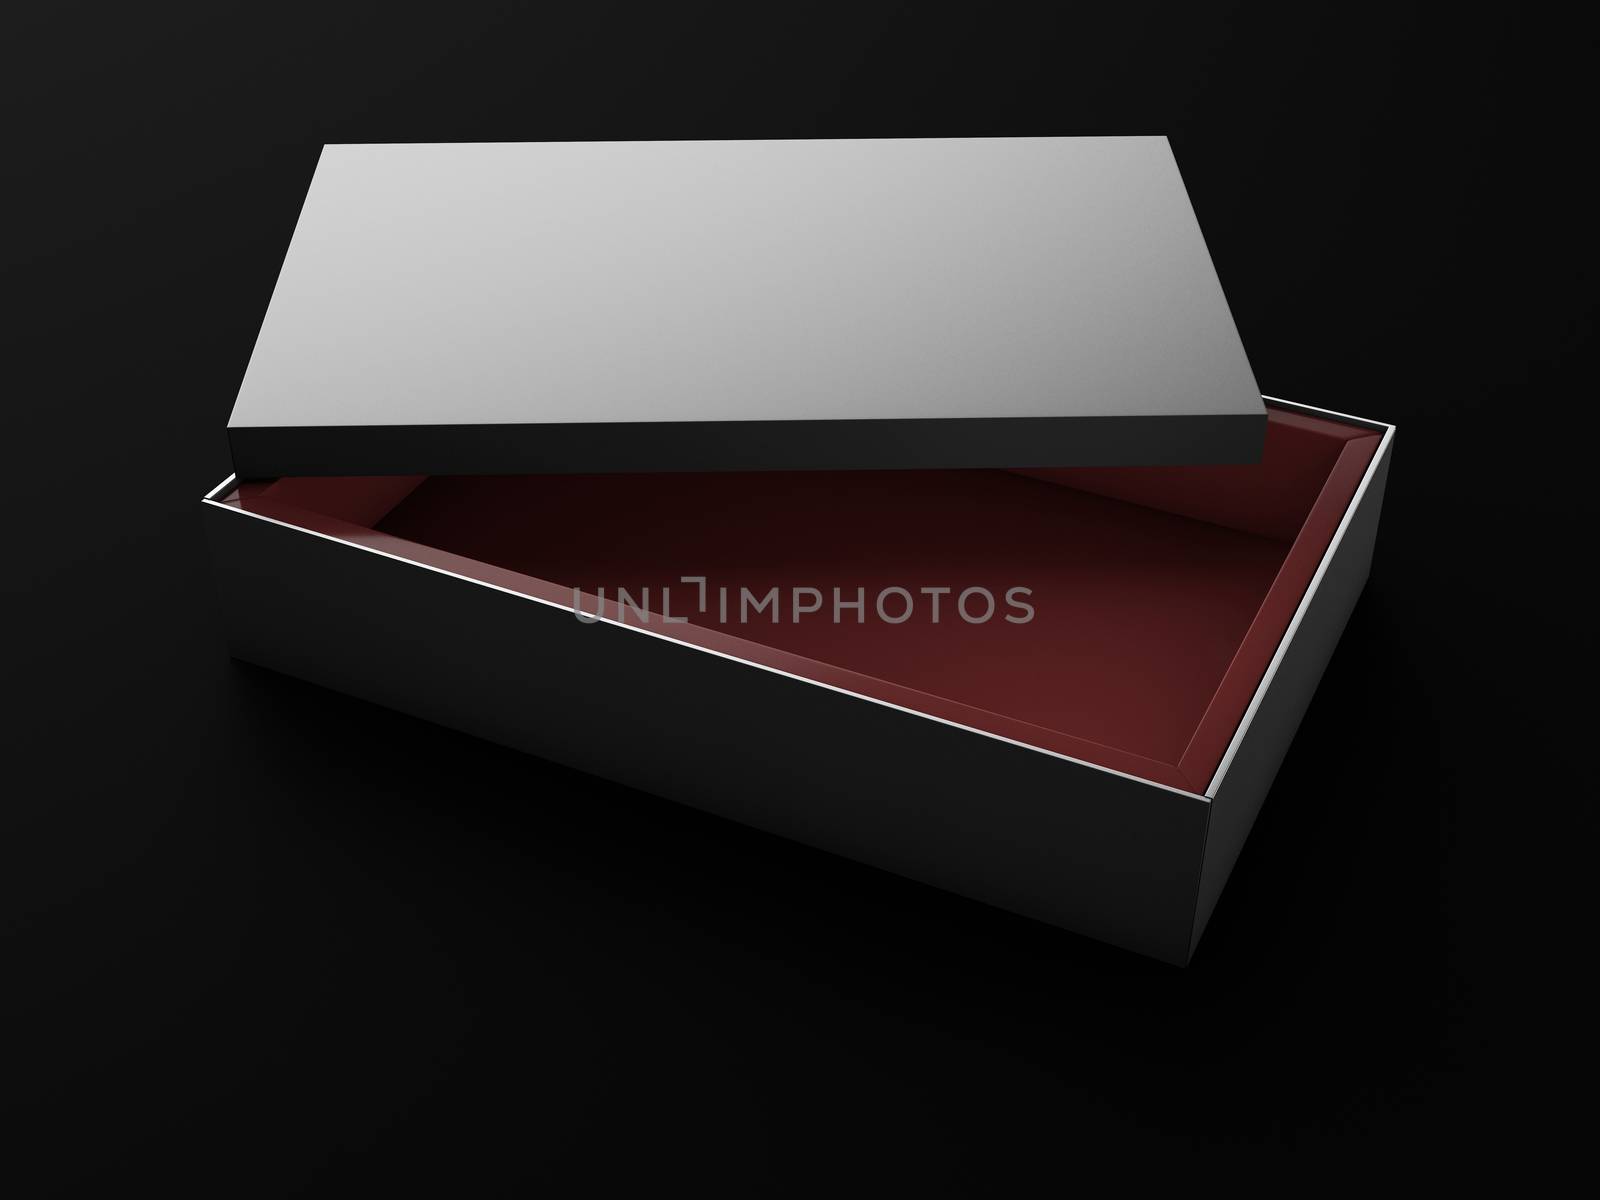 Black empty box on black background. Template for your presentation design 3d illustration.